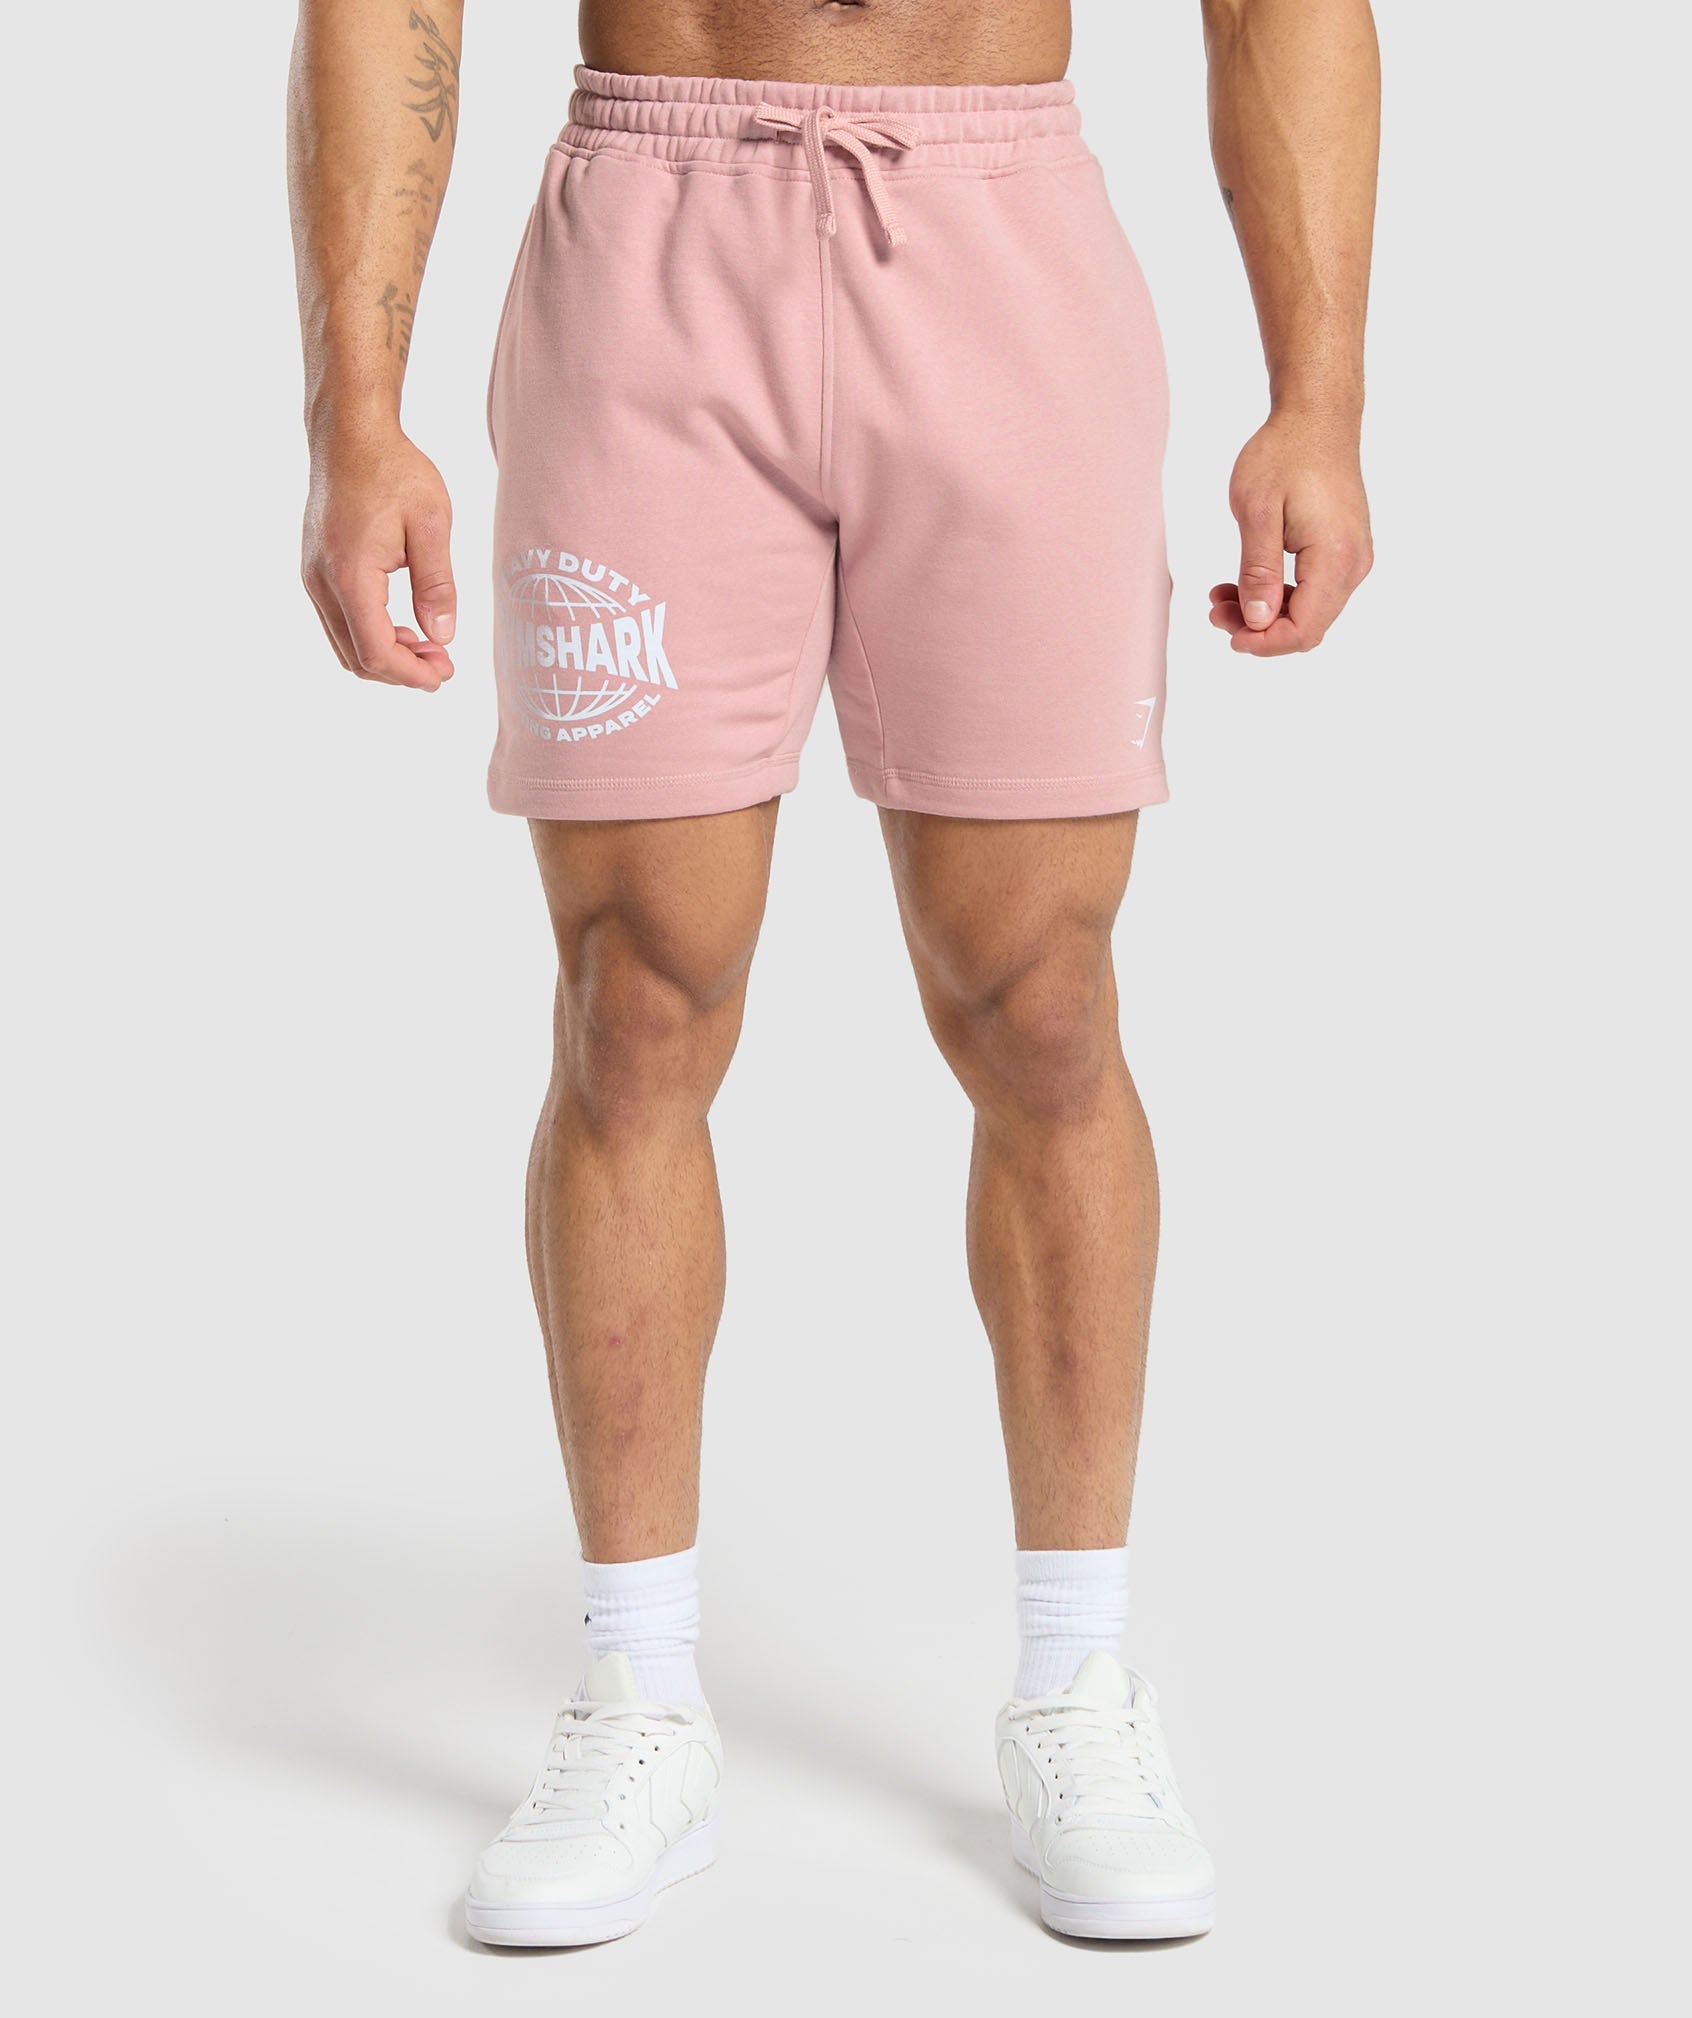 Heavy Duty Apparel 7" Shorts in Light Pink